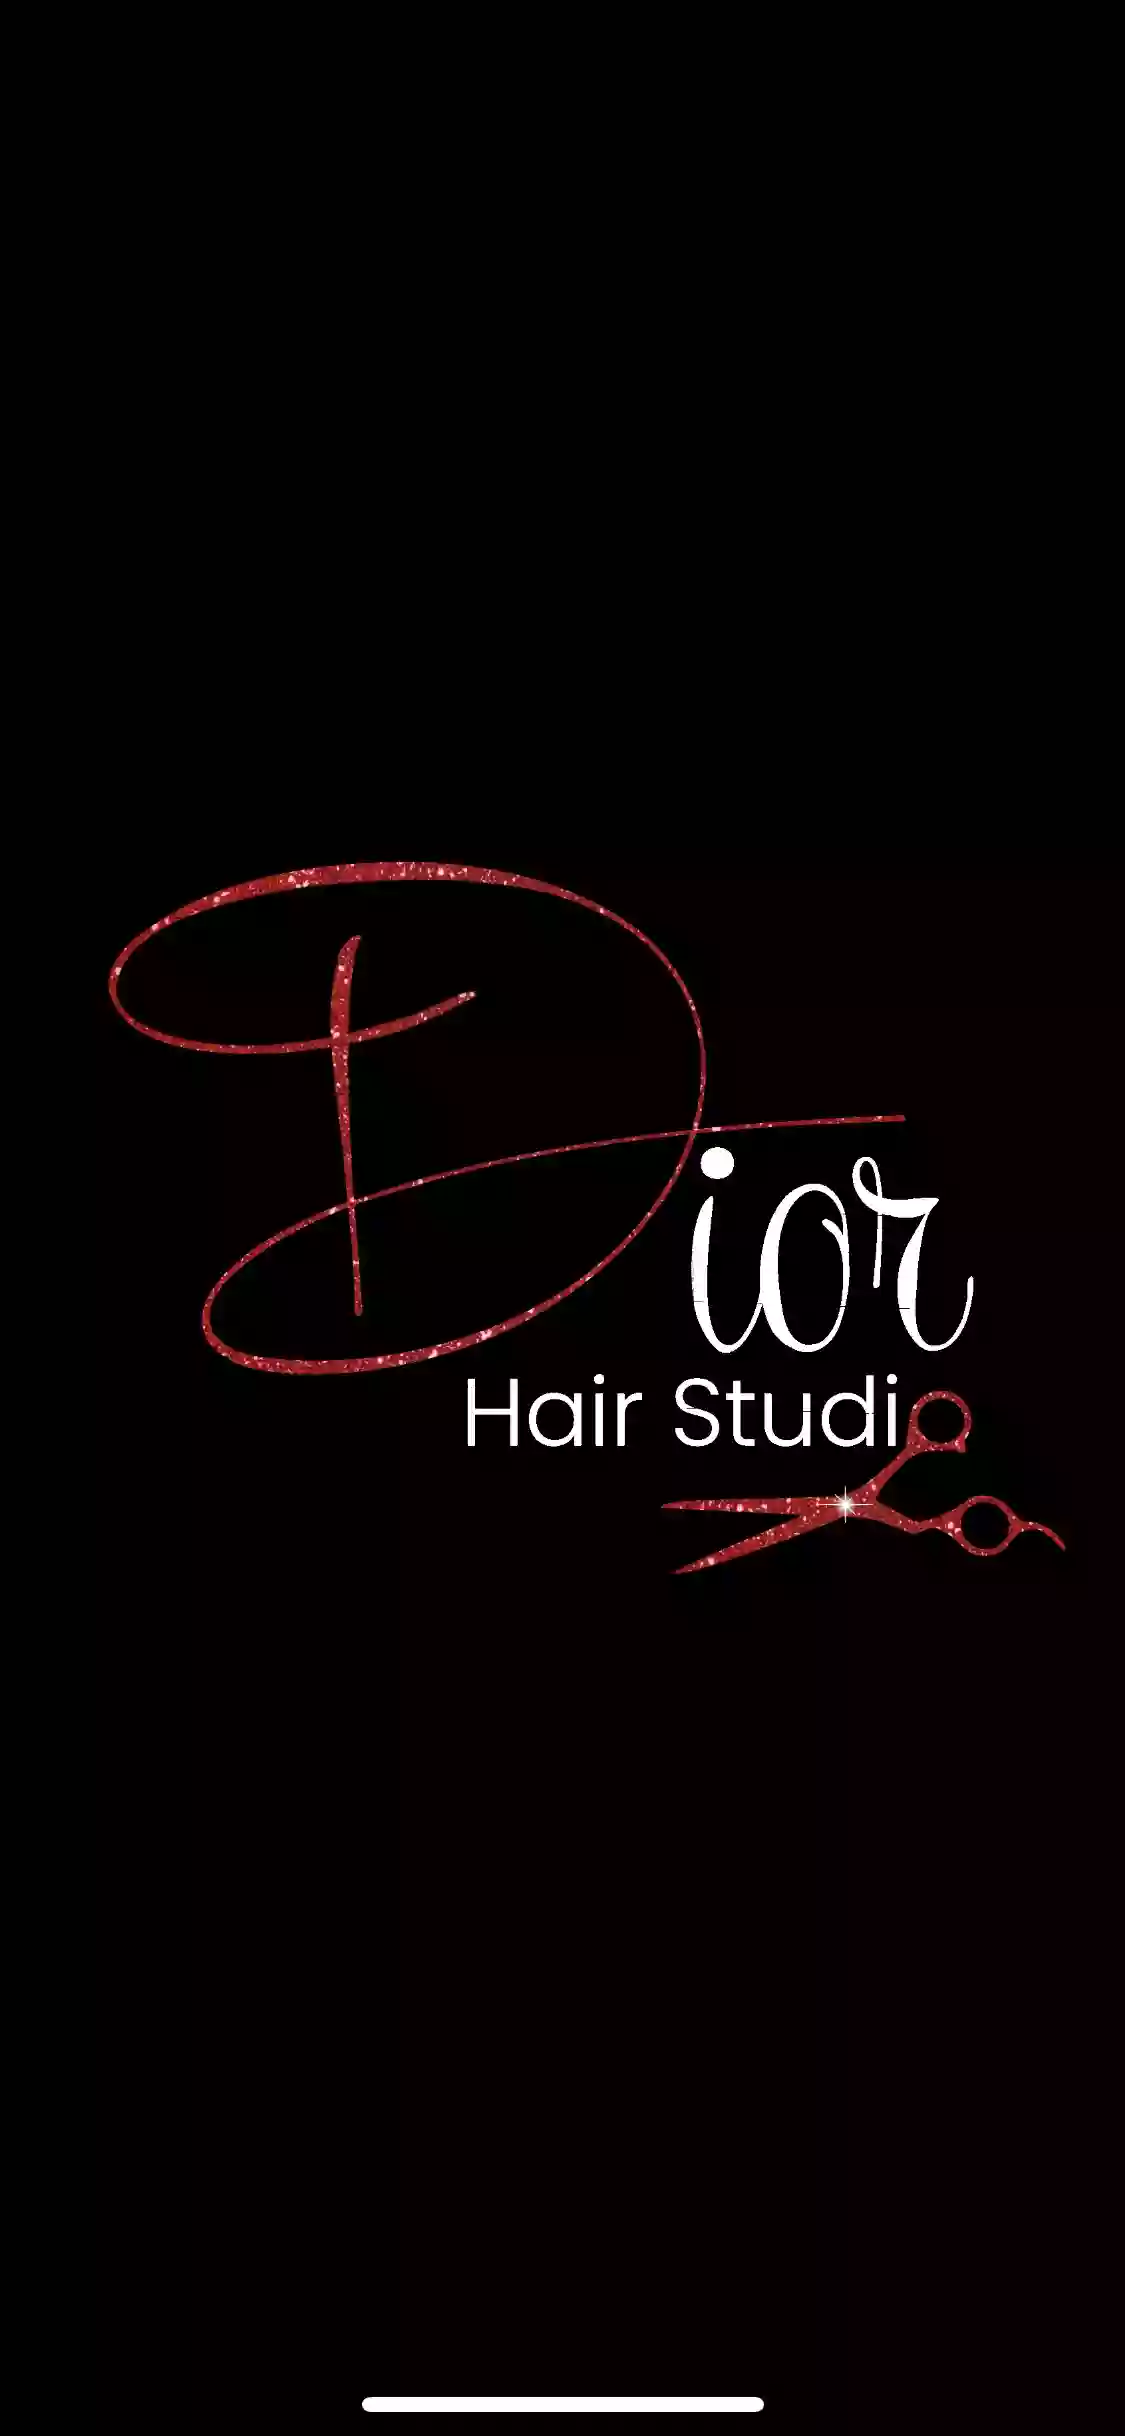 Dior Hair Studio